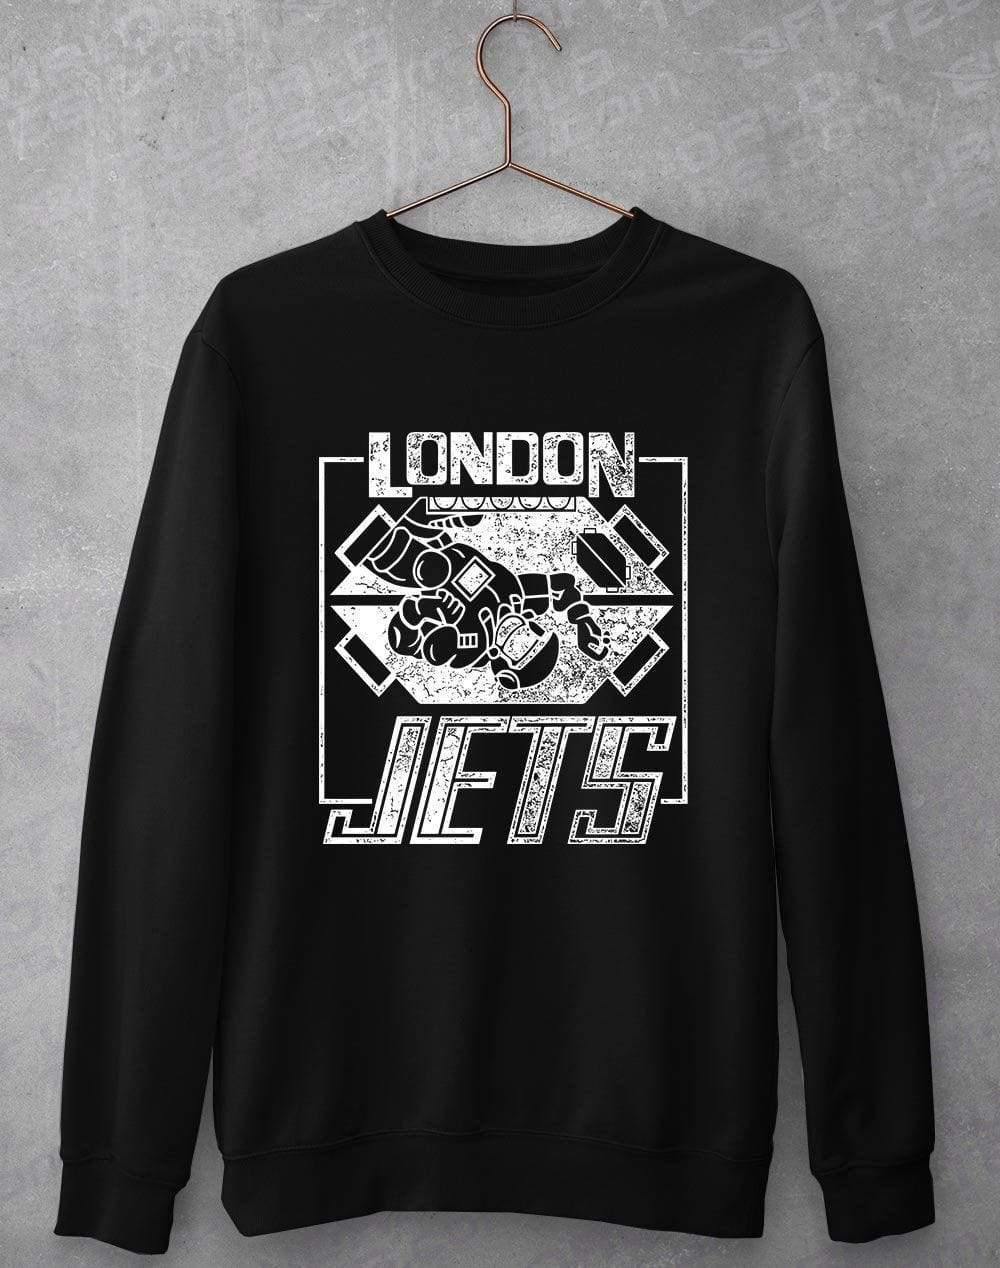 London Jets Sweatshirt S / Black  - Off World Tees